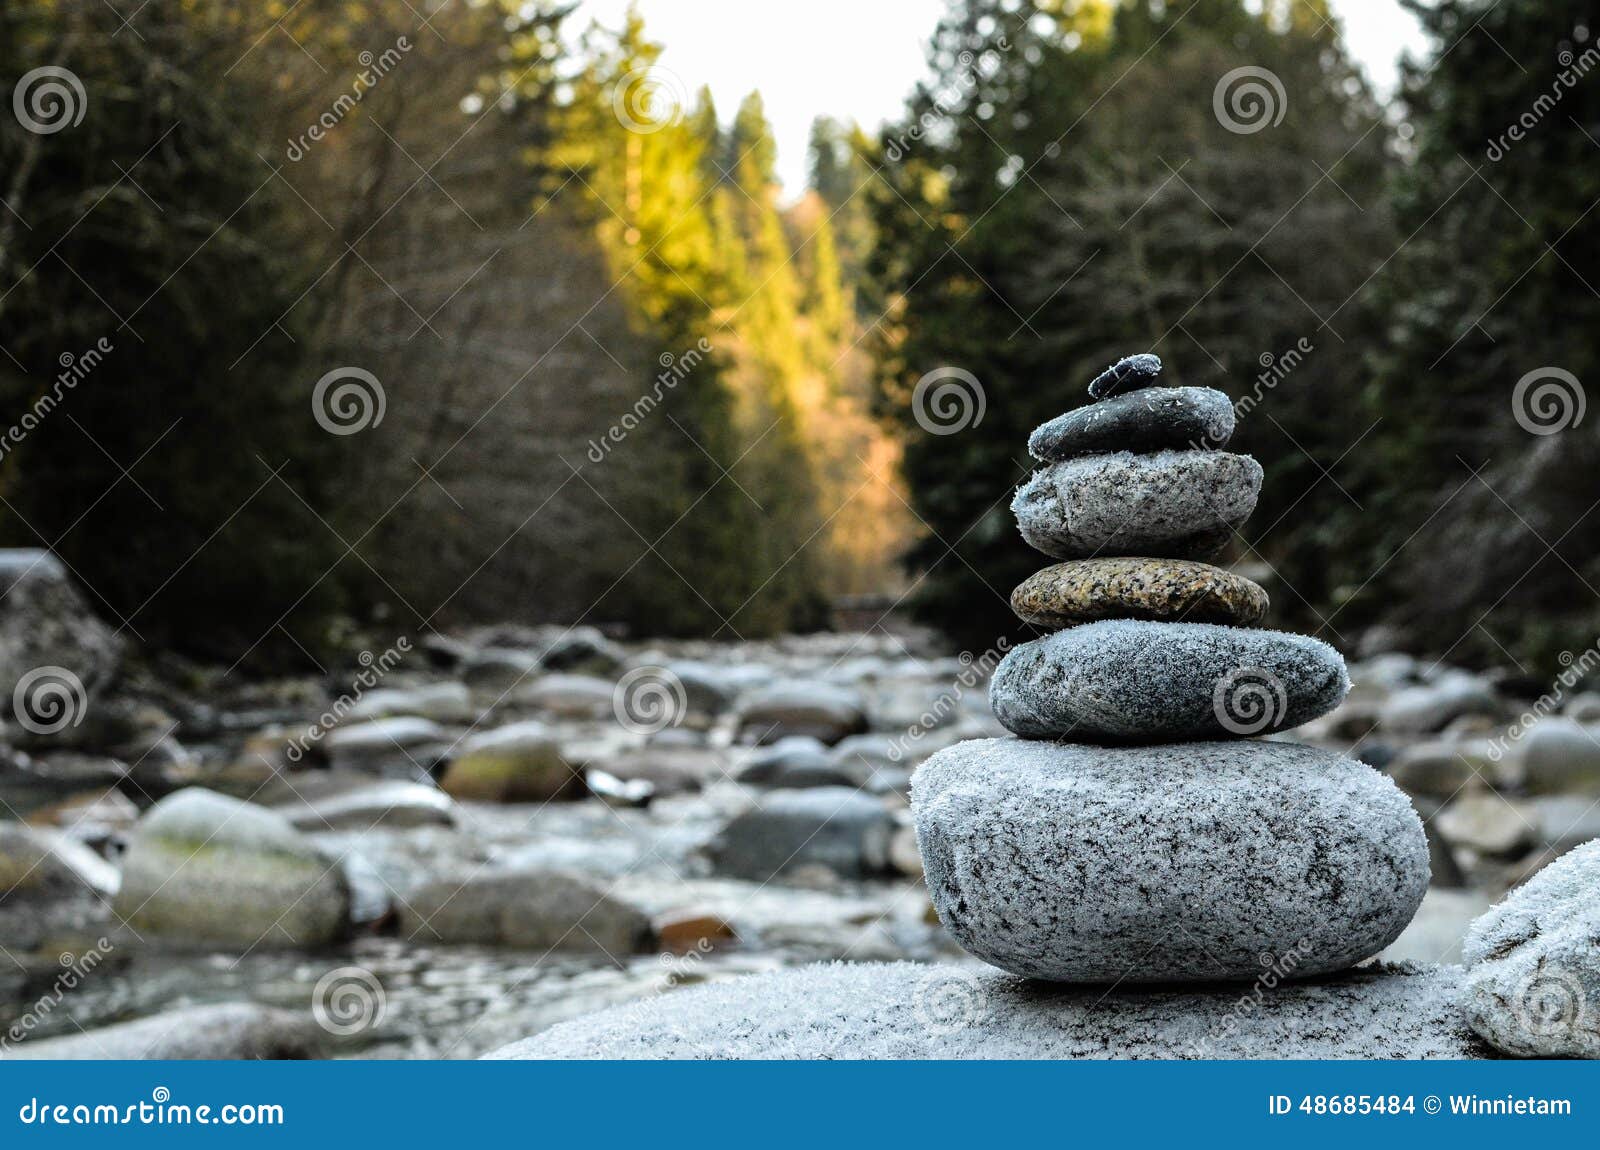 zen stones stacked on river scene